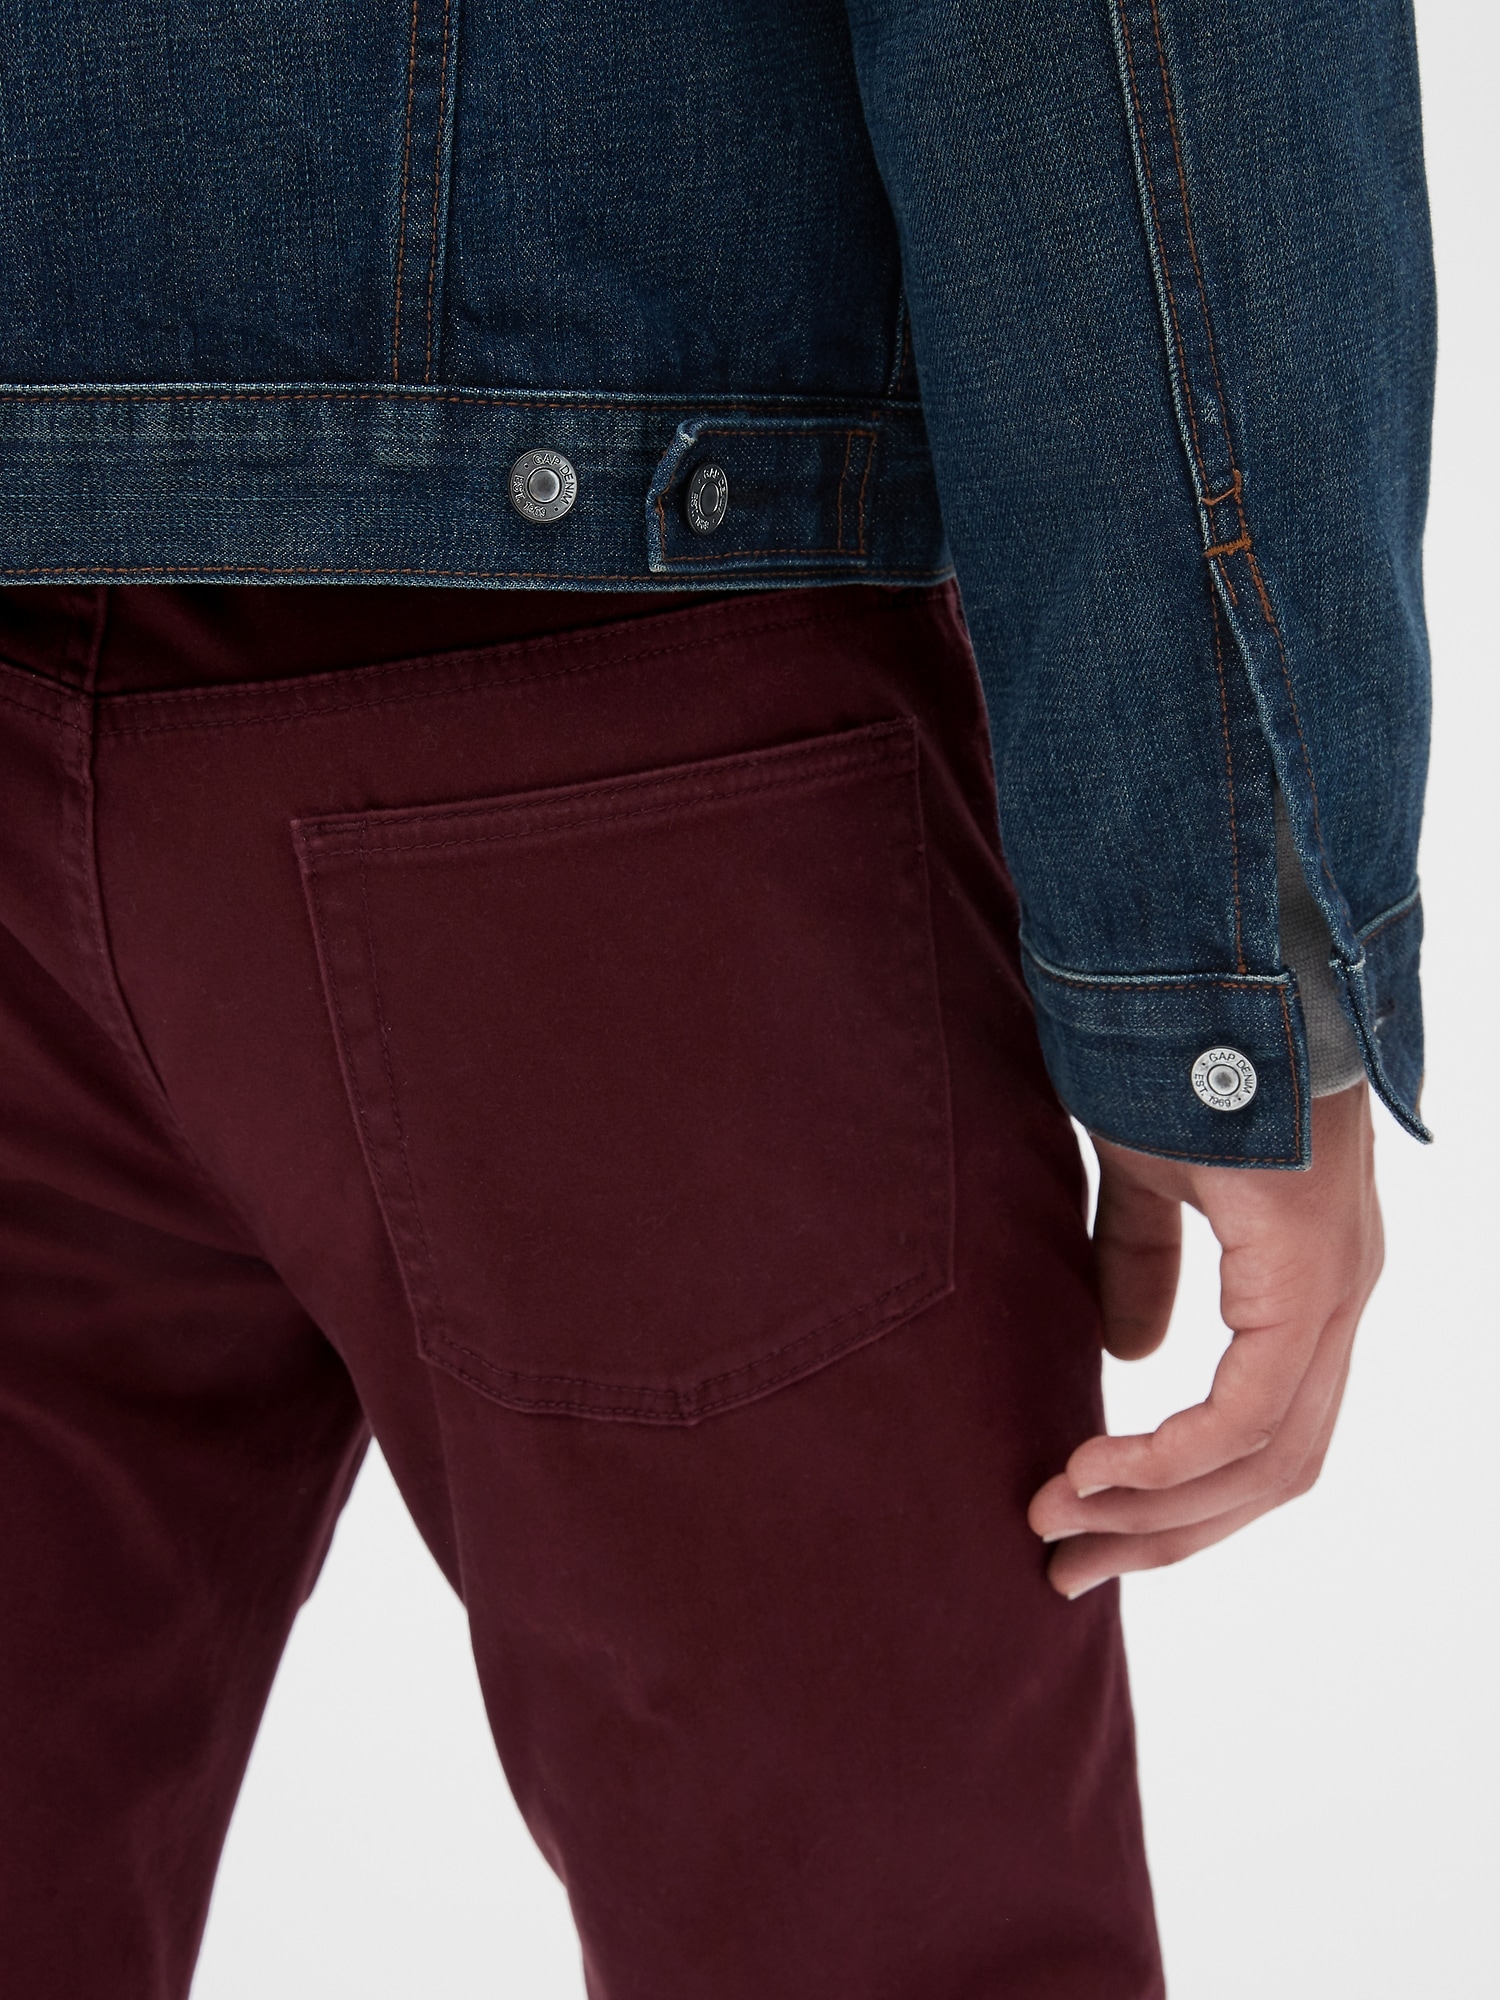 Gap soft wear slim jeans with gapflex